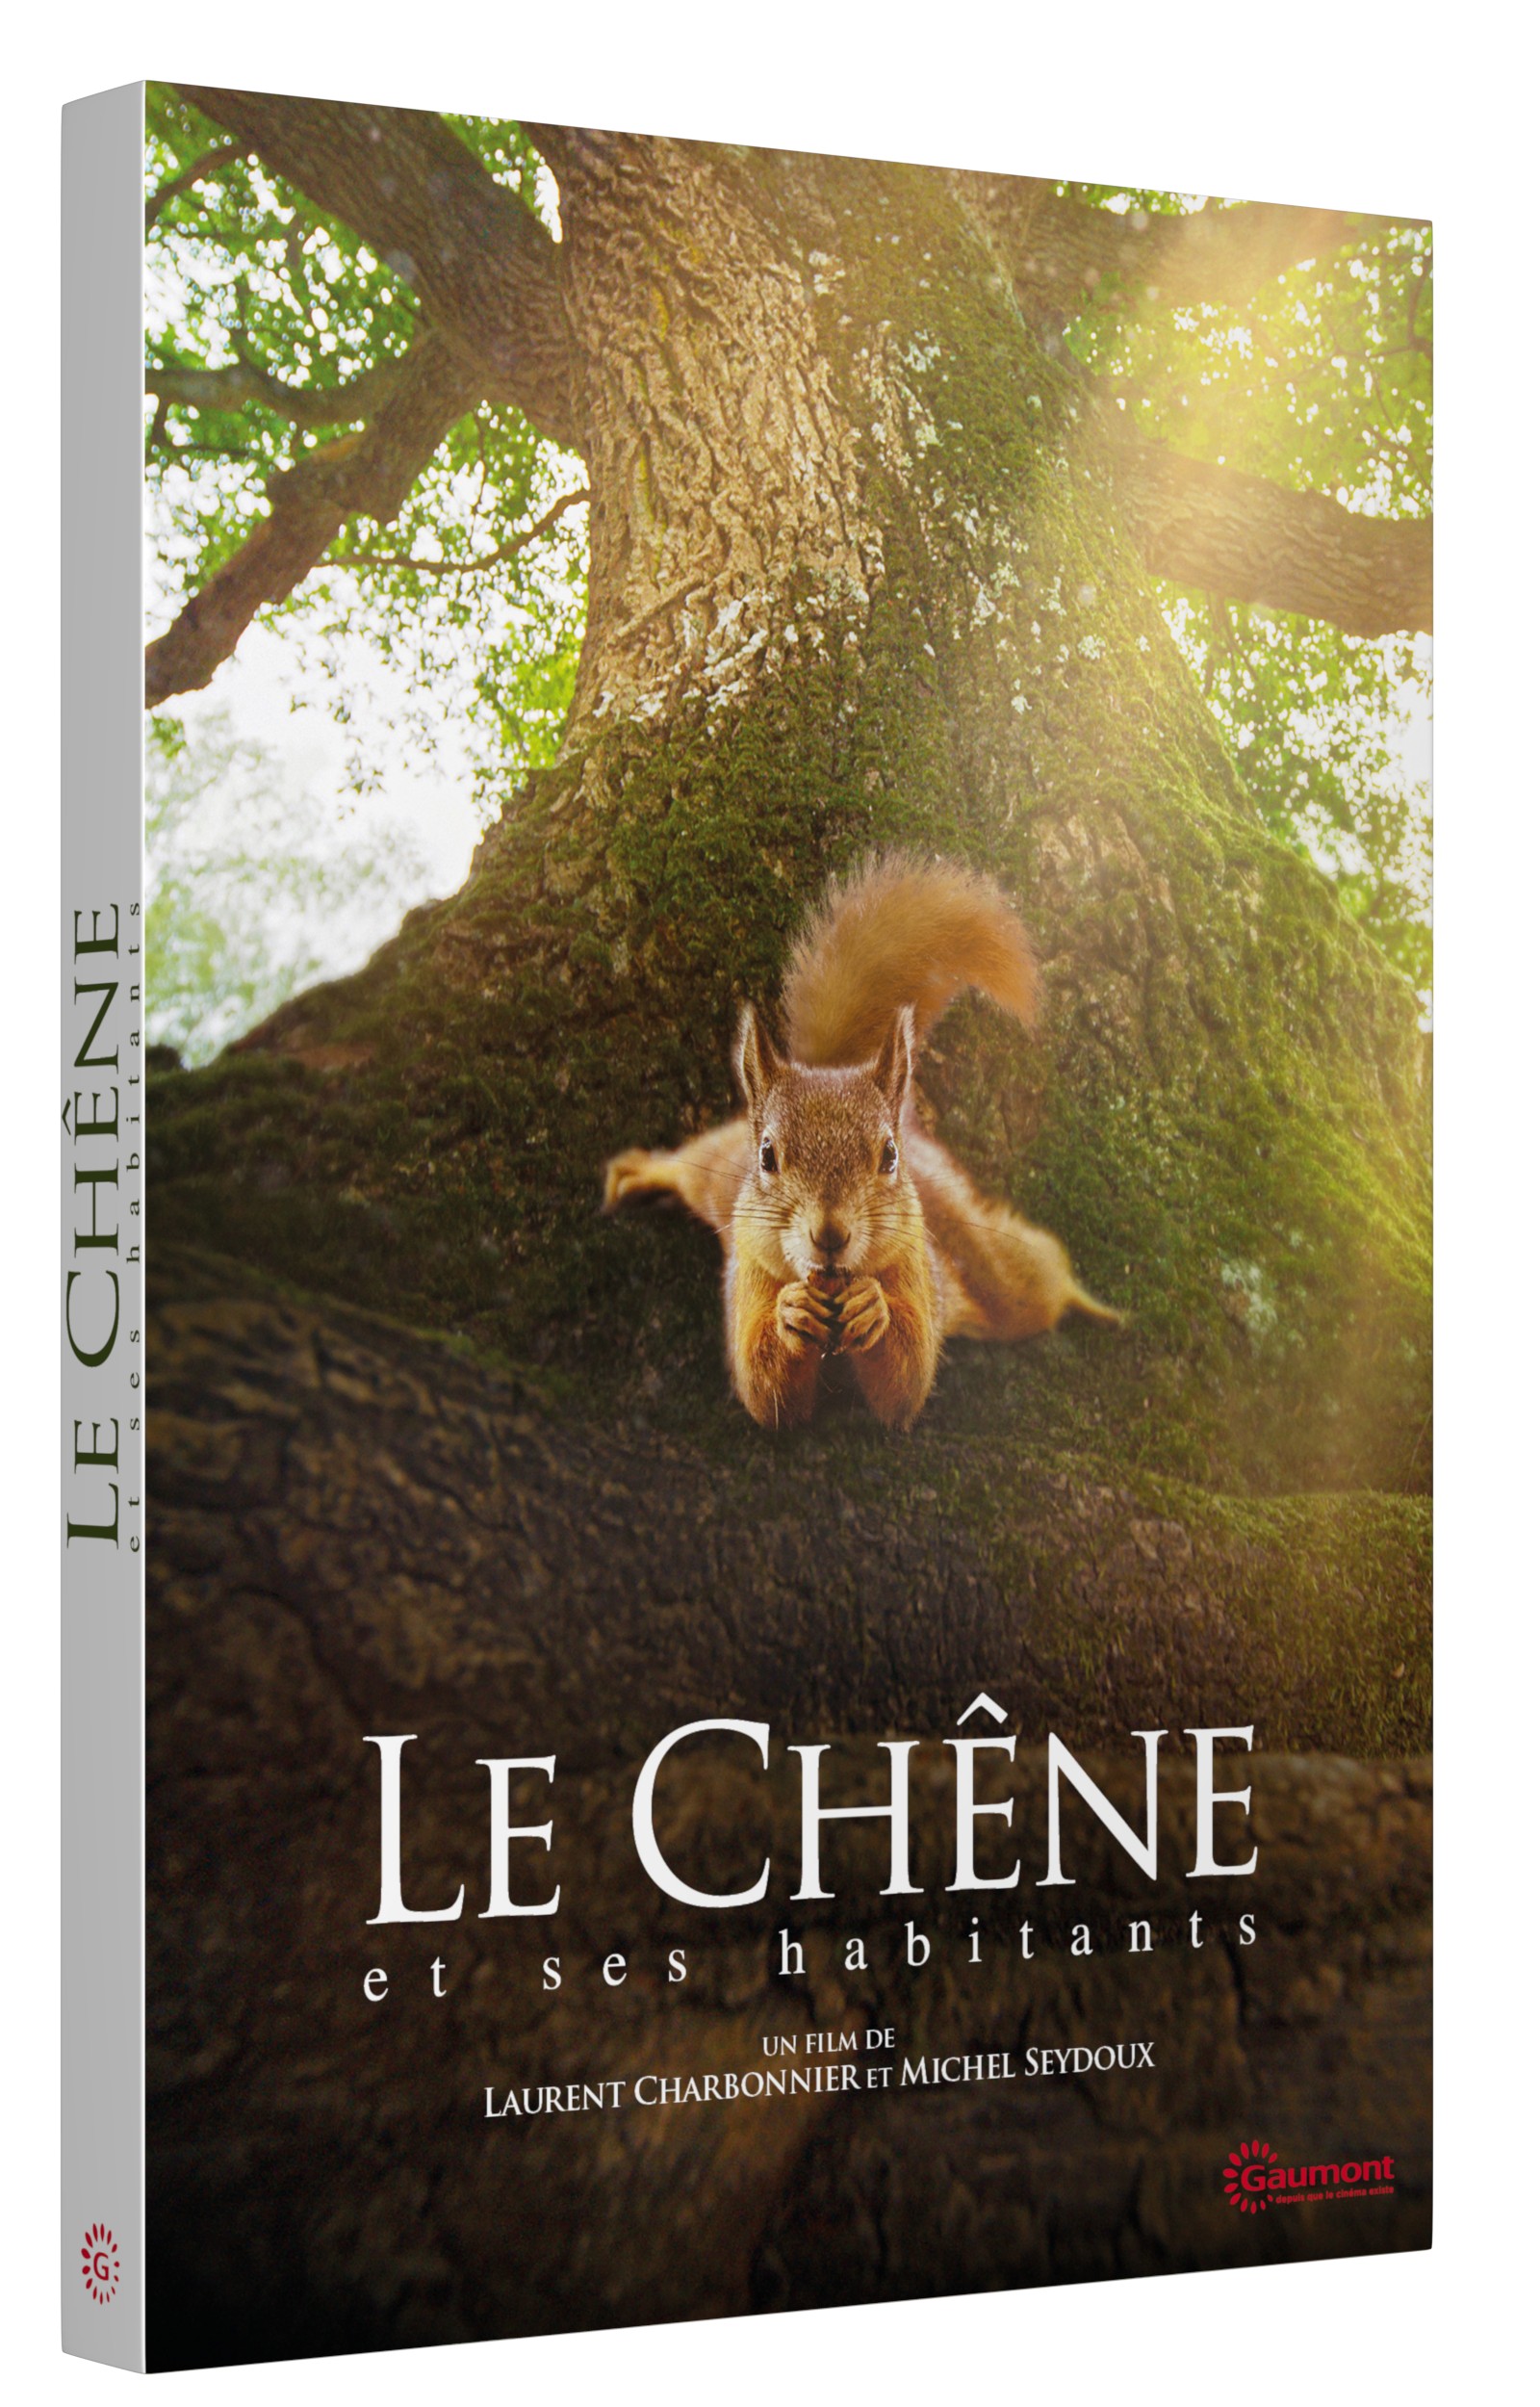 LE CHENE - DVD